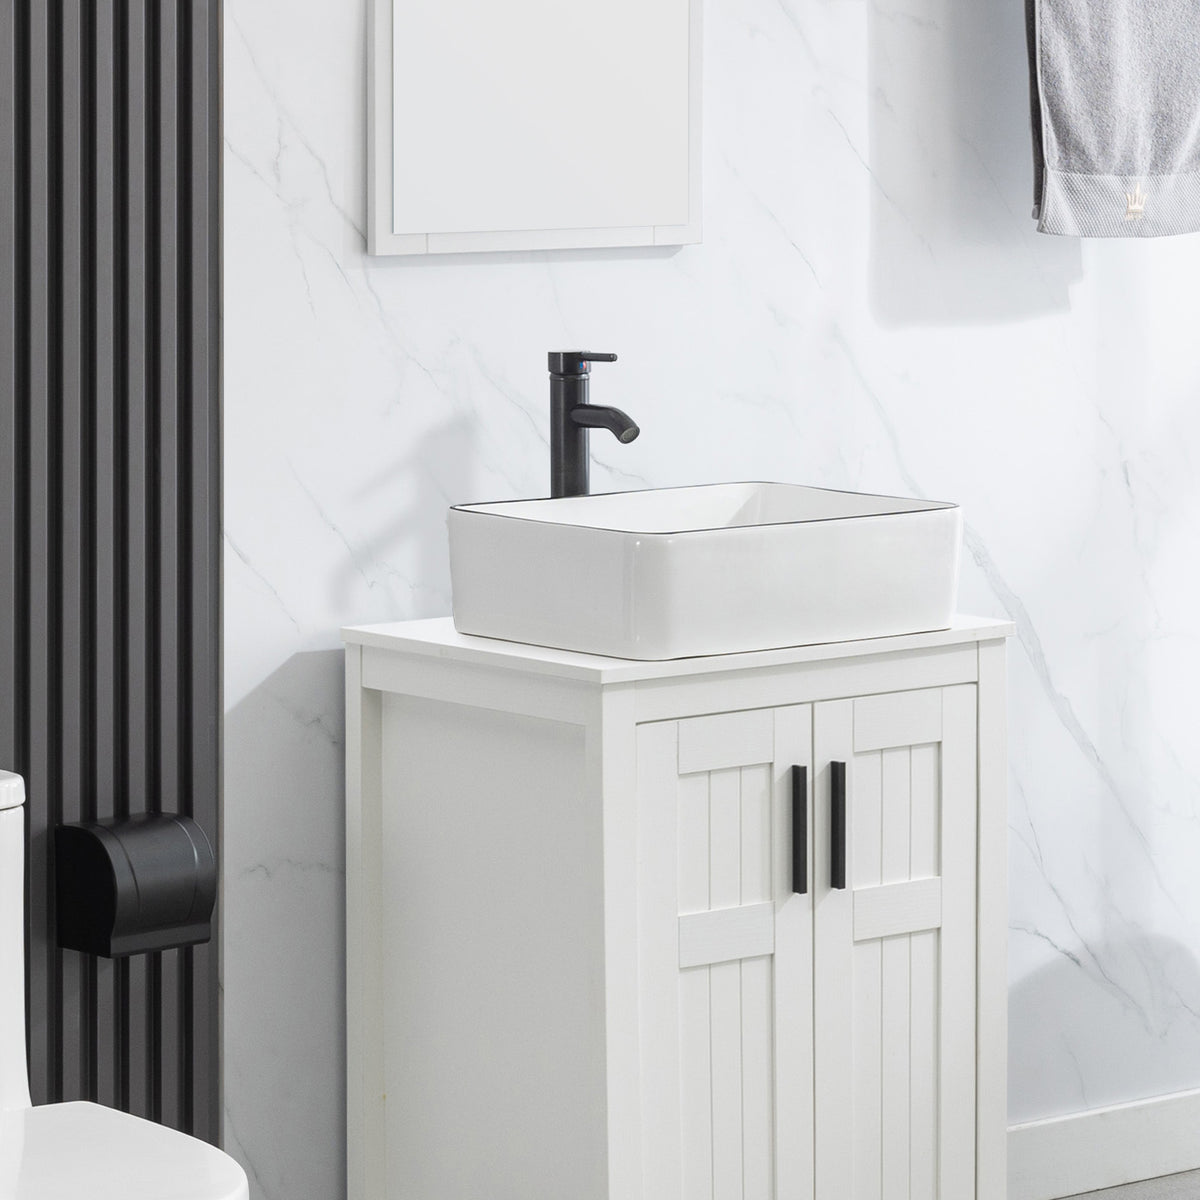 Bathroom Vessel Sink Combo Ceramic Bowl & Faucet & Pop Up Drain - White with Black Decor Line